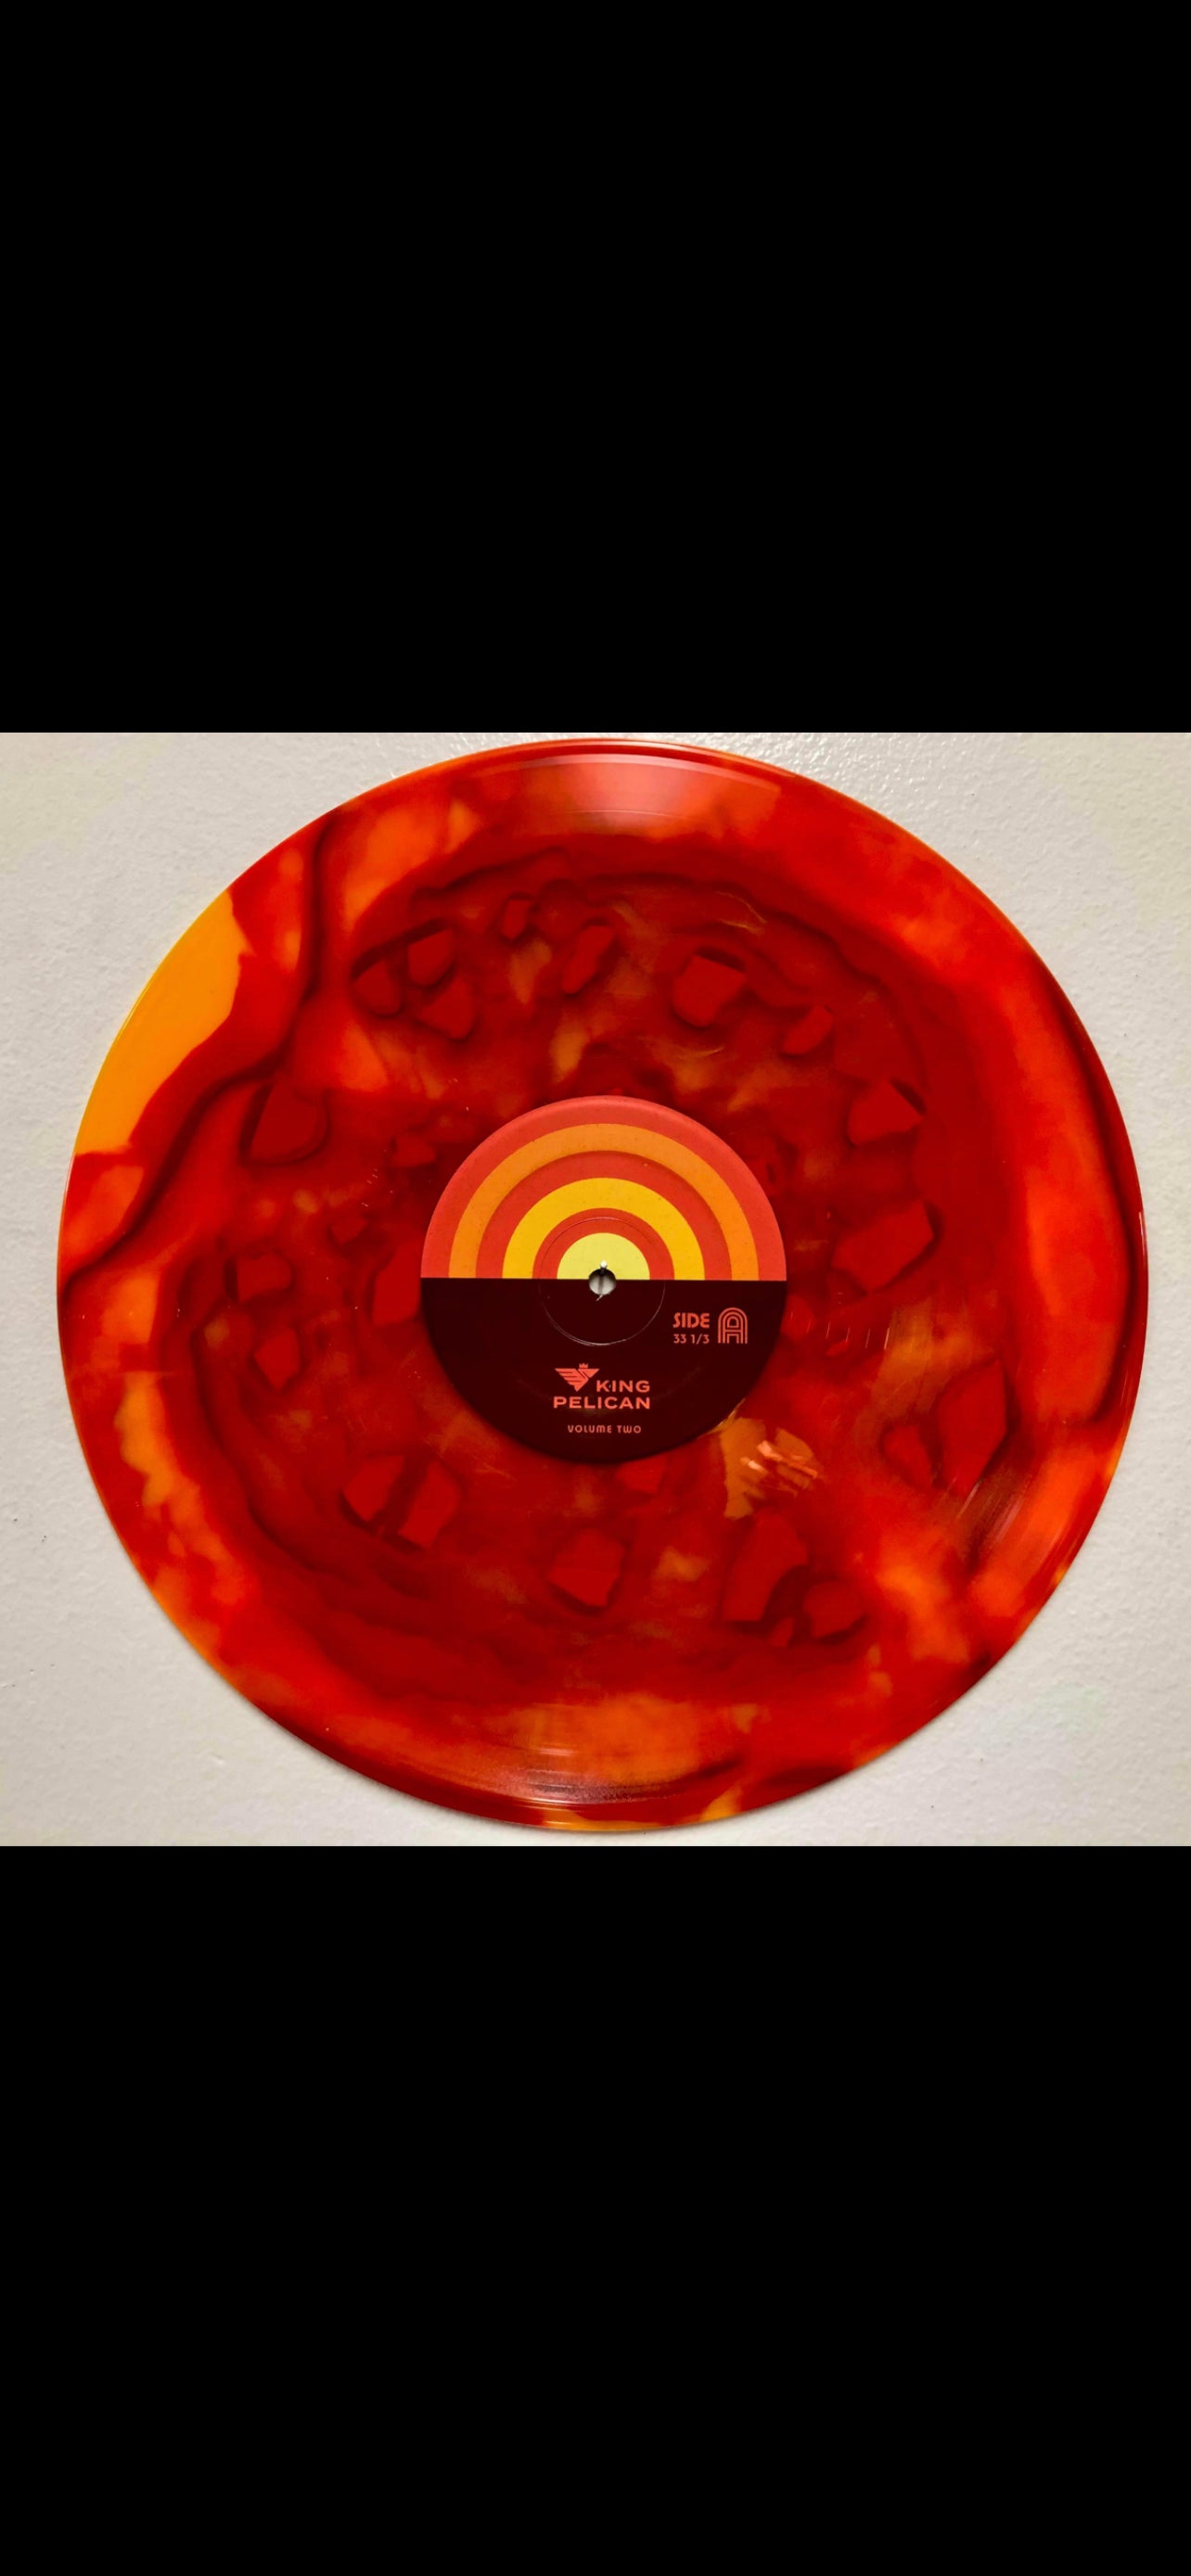 OMR-076 KING PELICAN “Volume 2” CD/LP/WAX MAGE